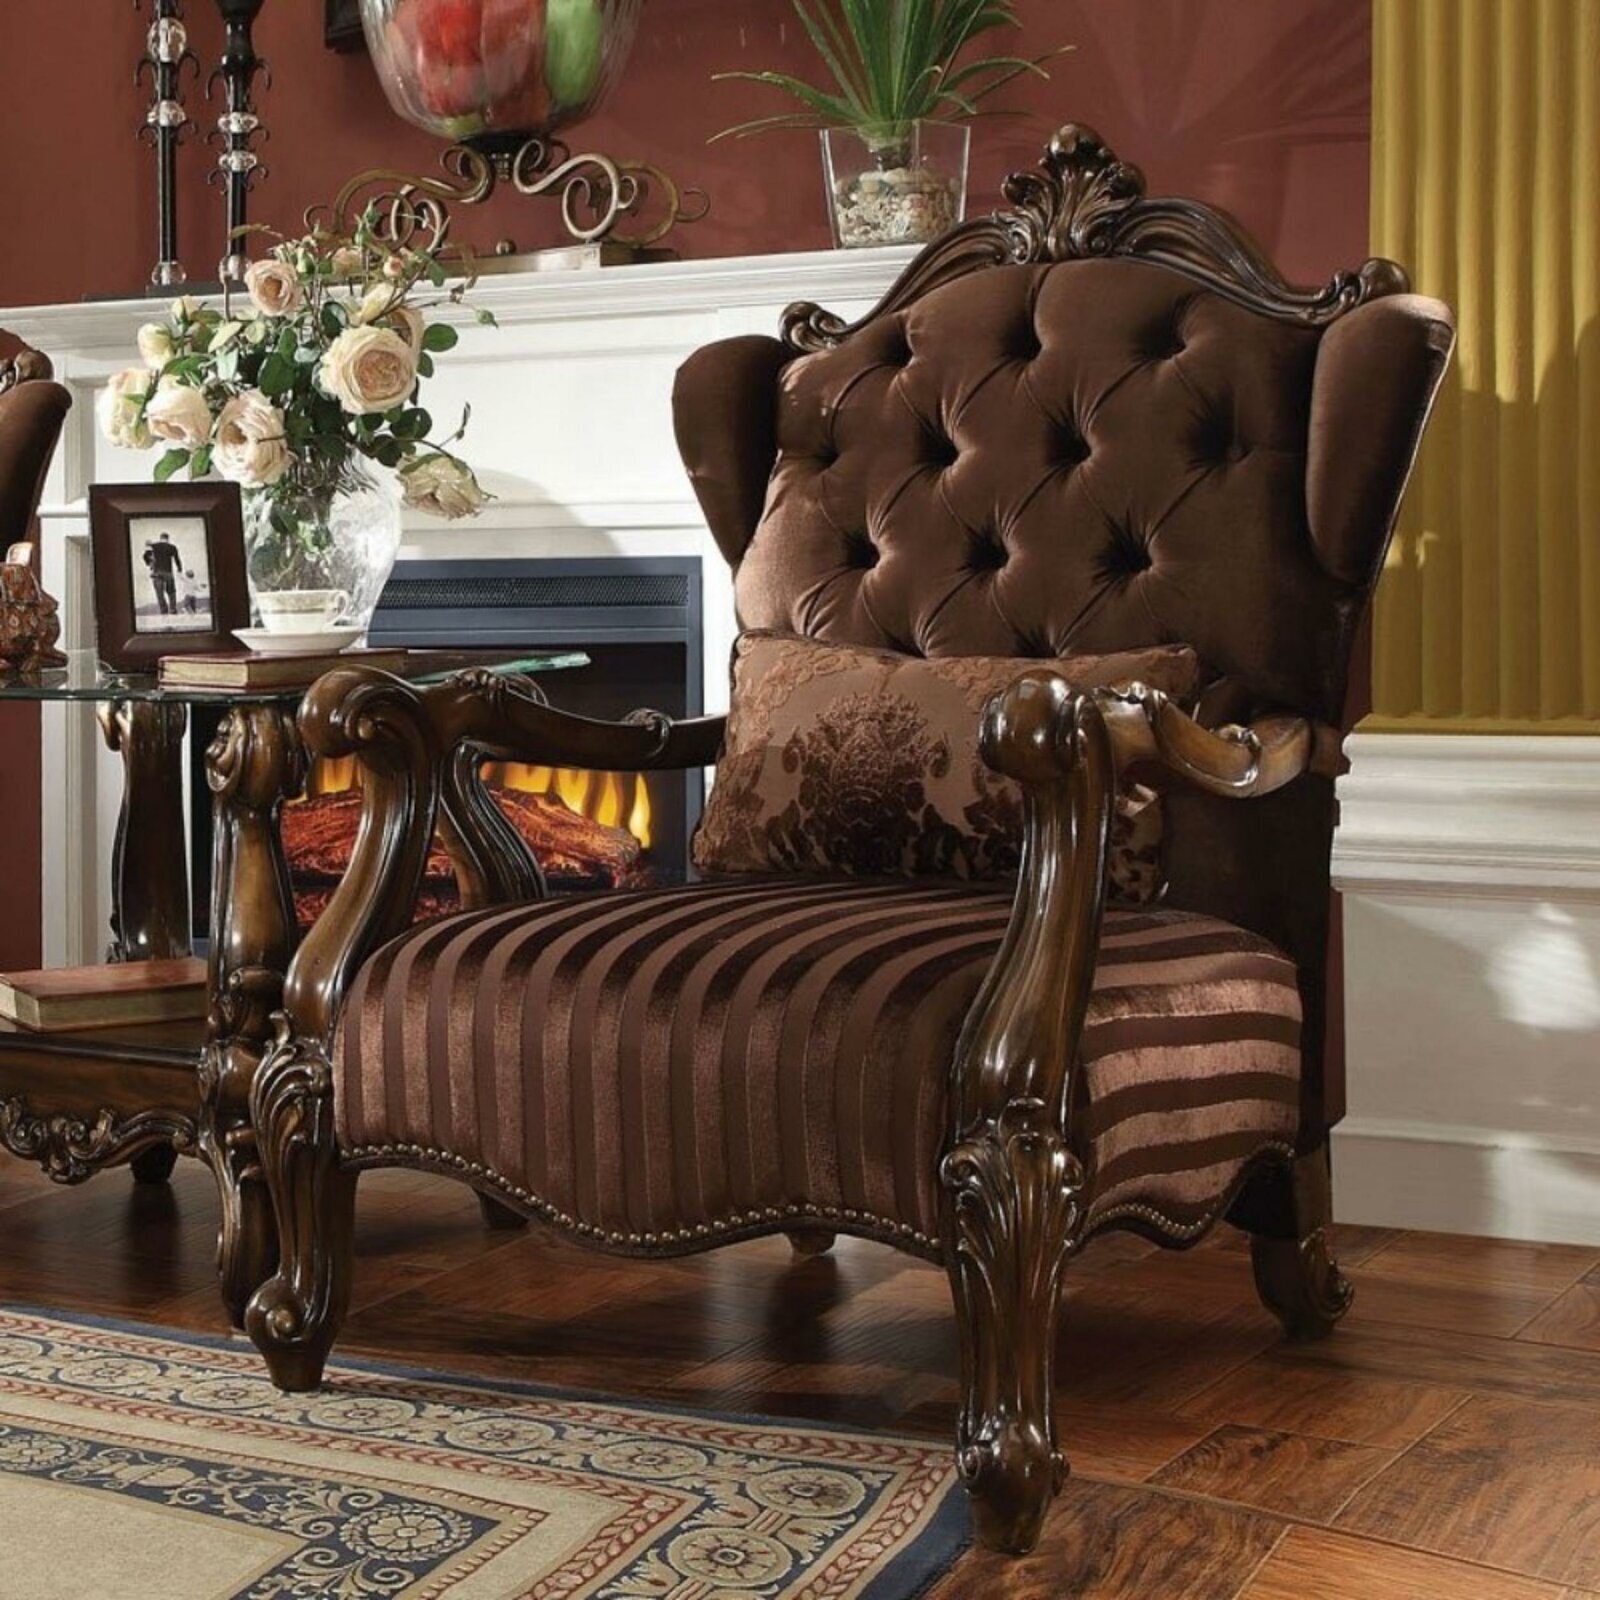 Majestic Victorian armchair